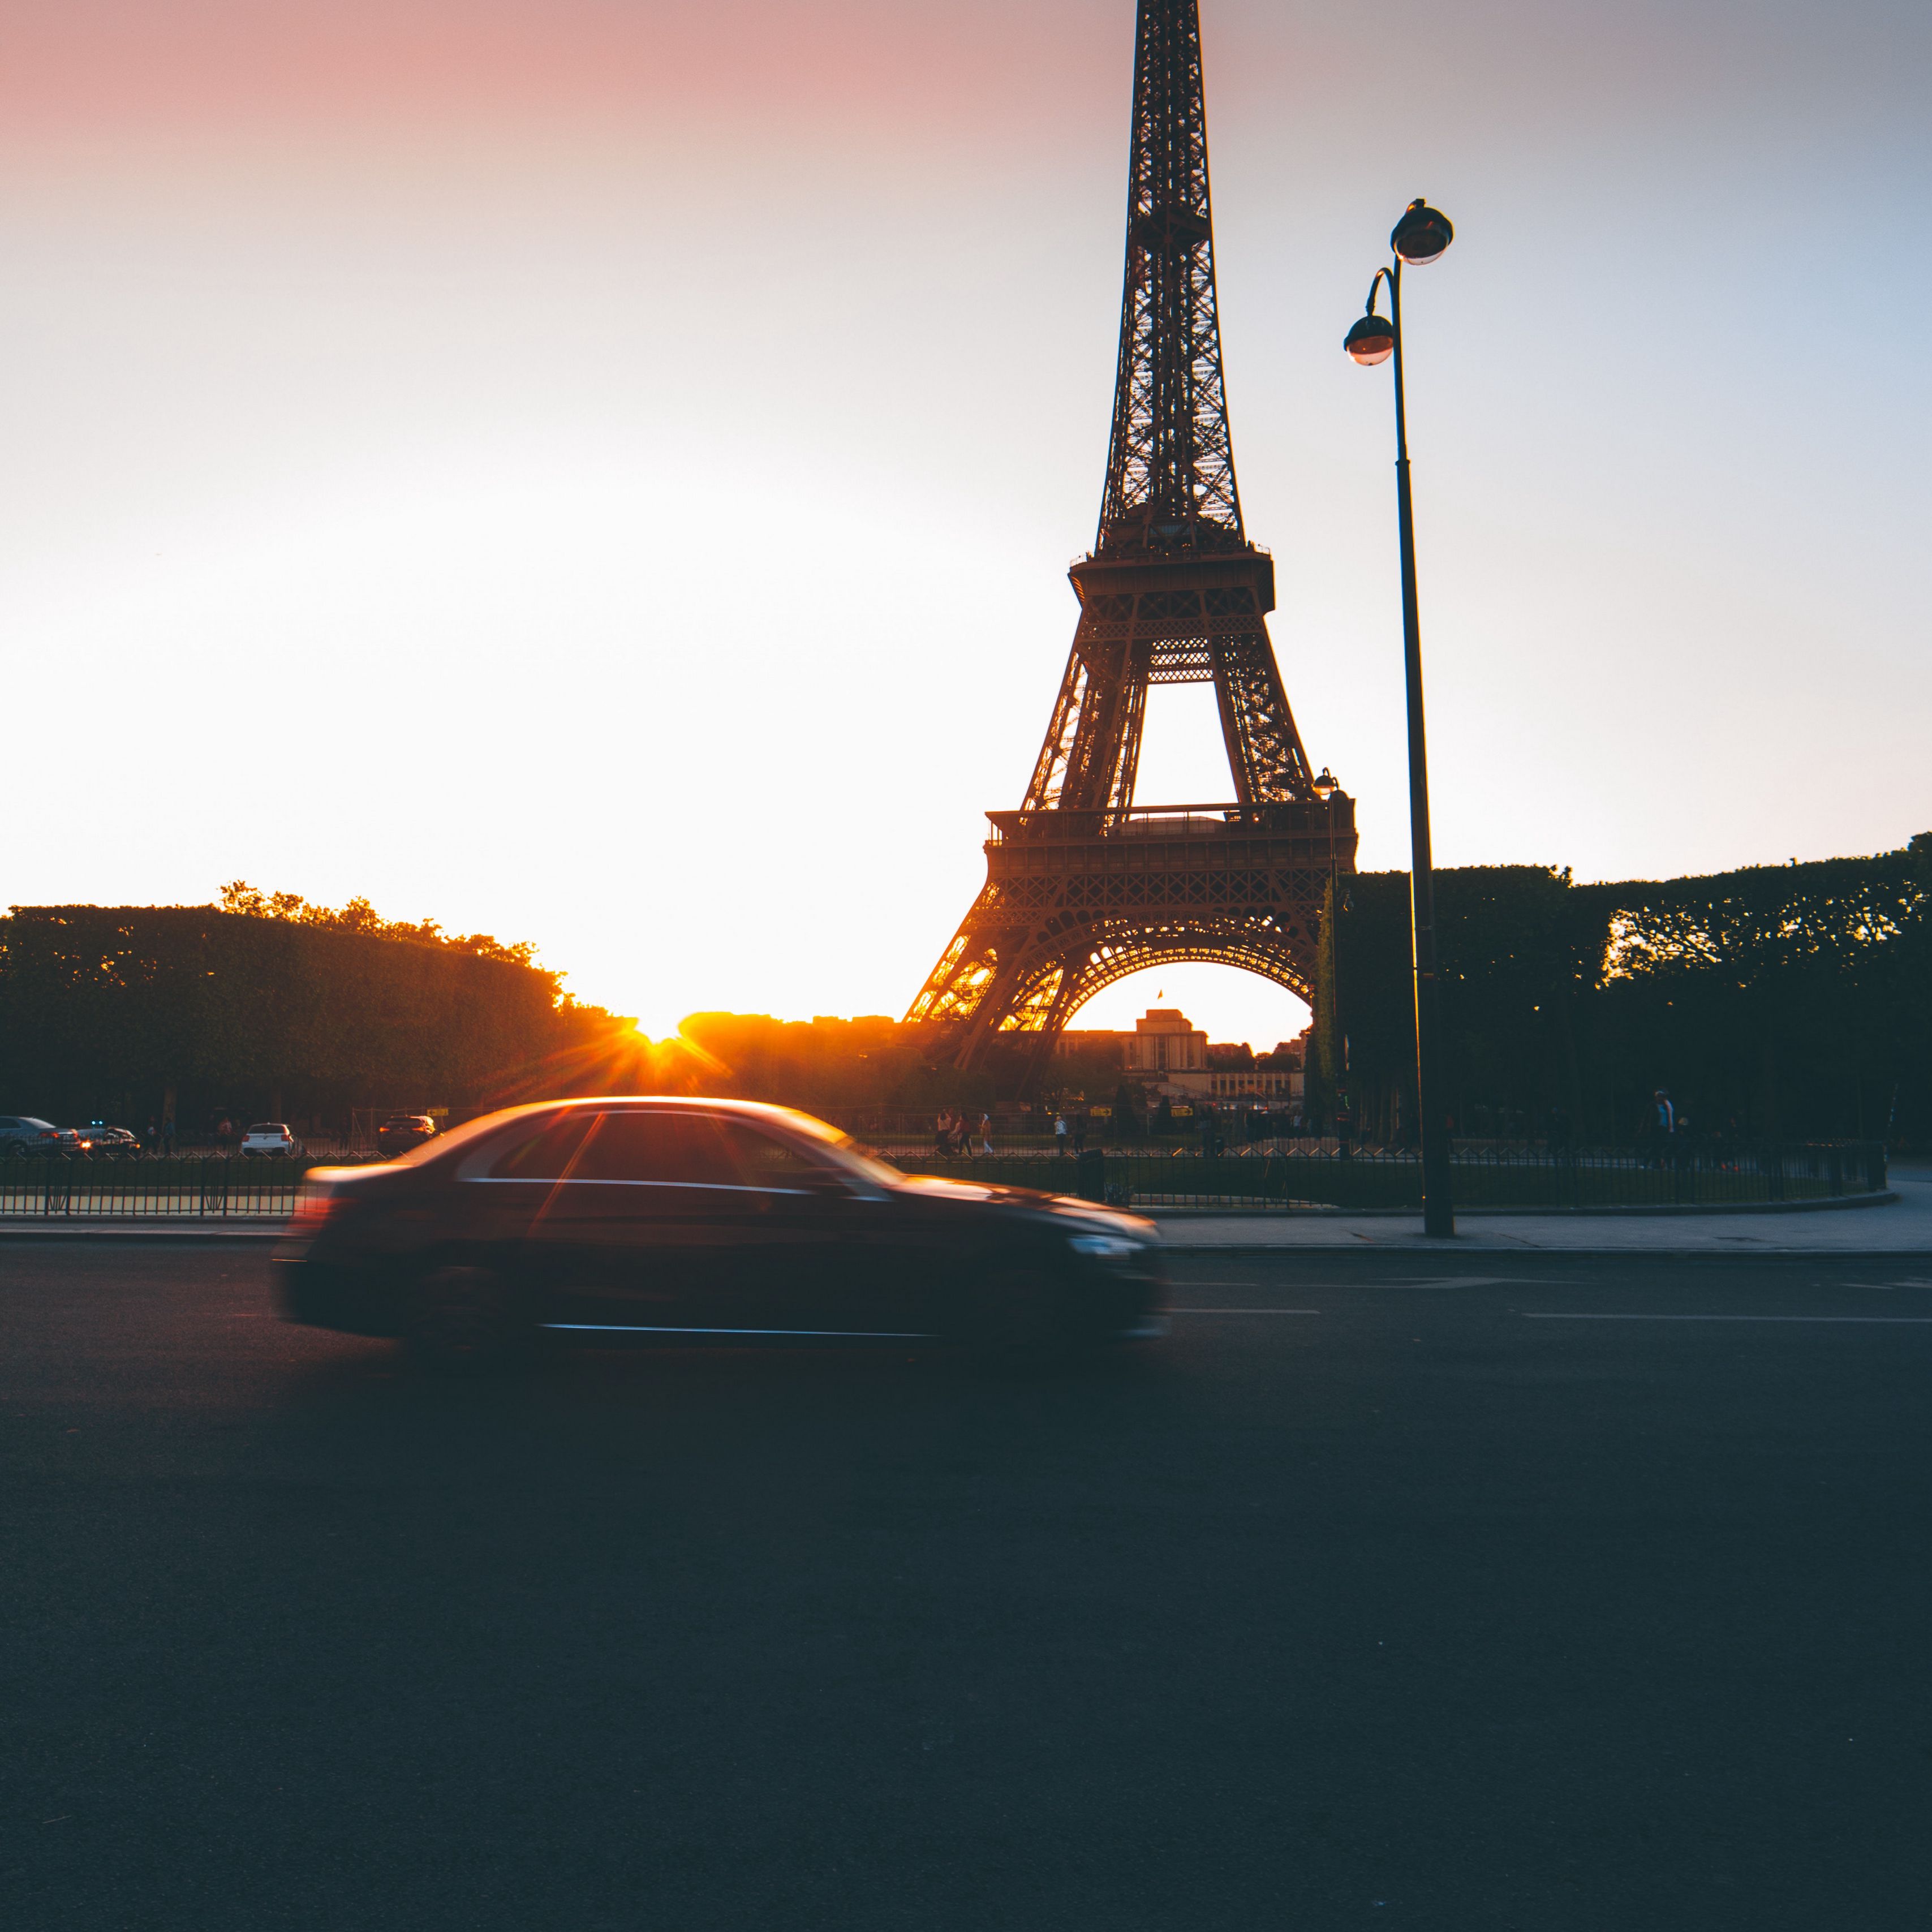 Download Wallpaper 3415x3415 Eiffel Tower Paris France Car Traffic